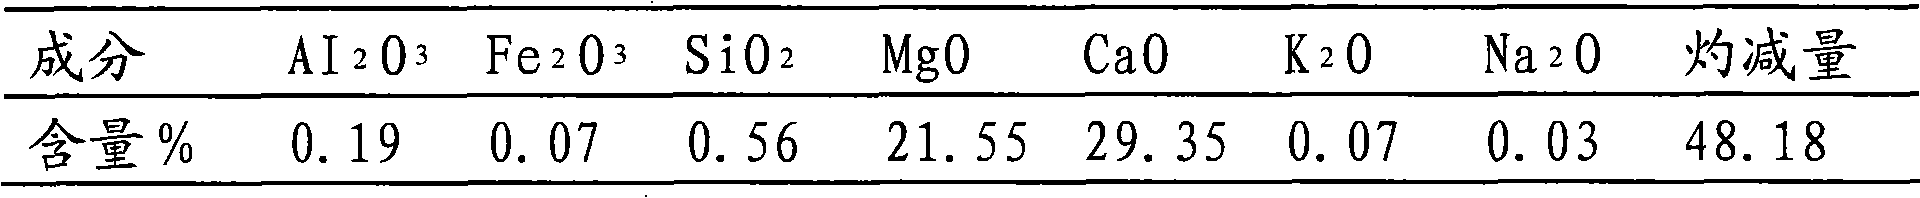 Method for preparing metal magnesium by using dolomite as raw material